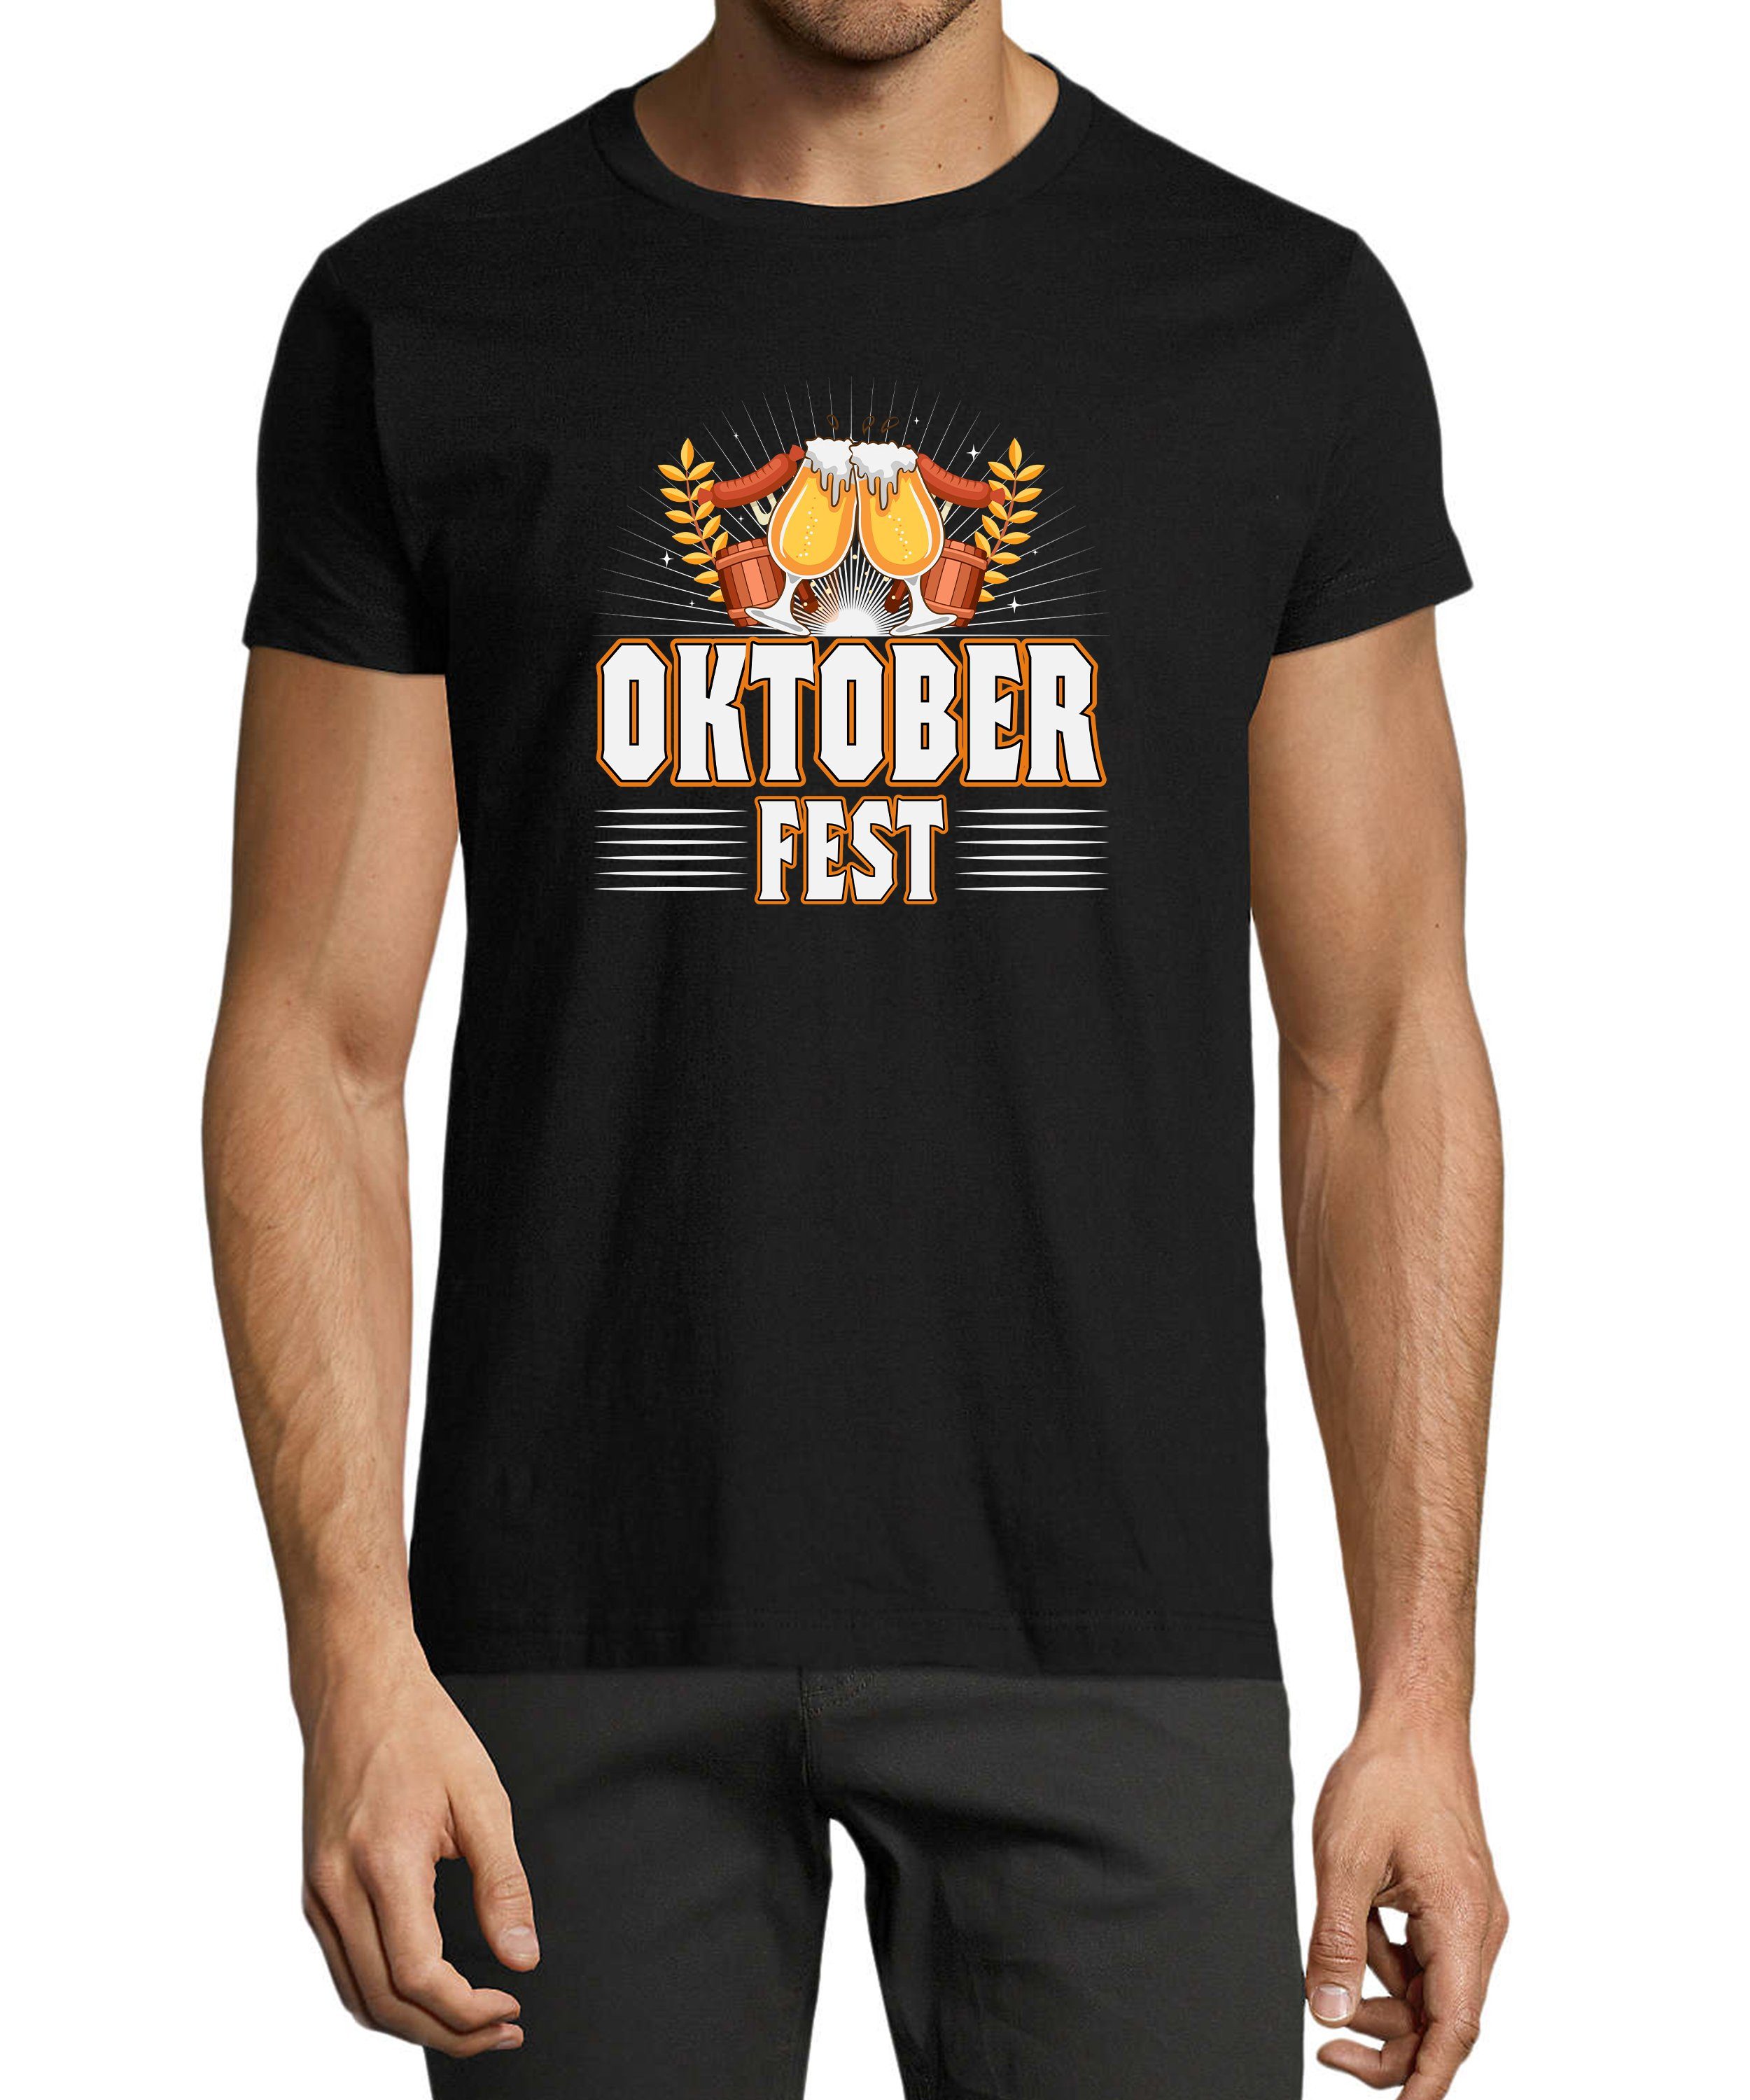 mit Fit, Herren T-Shirt Aufdruck schwarz - Baumwollshirt MyDesign24 Party T-Shirt Shirt Regular Oktoberfest i327